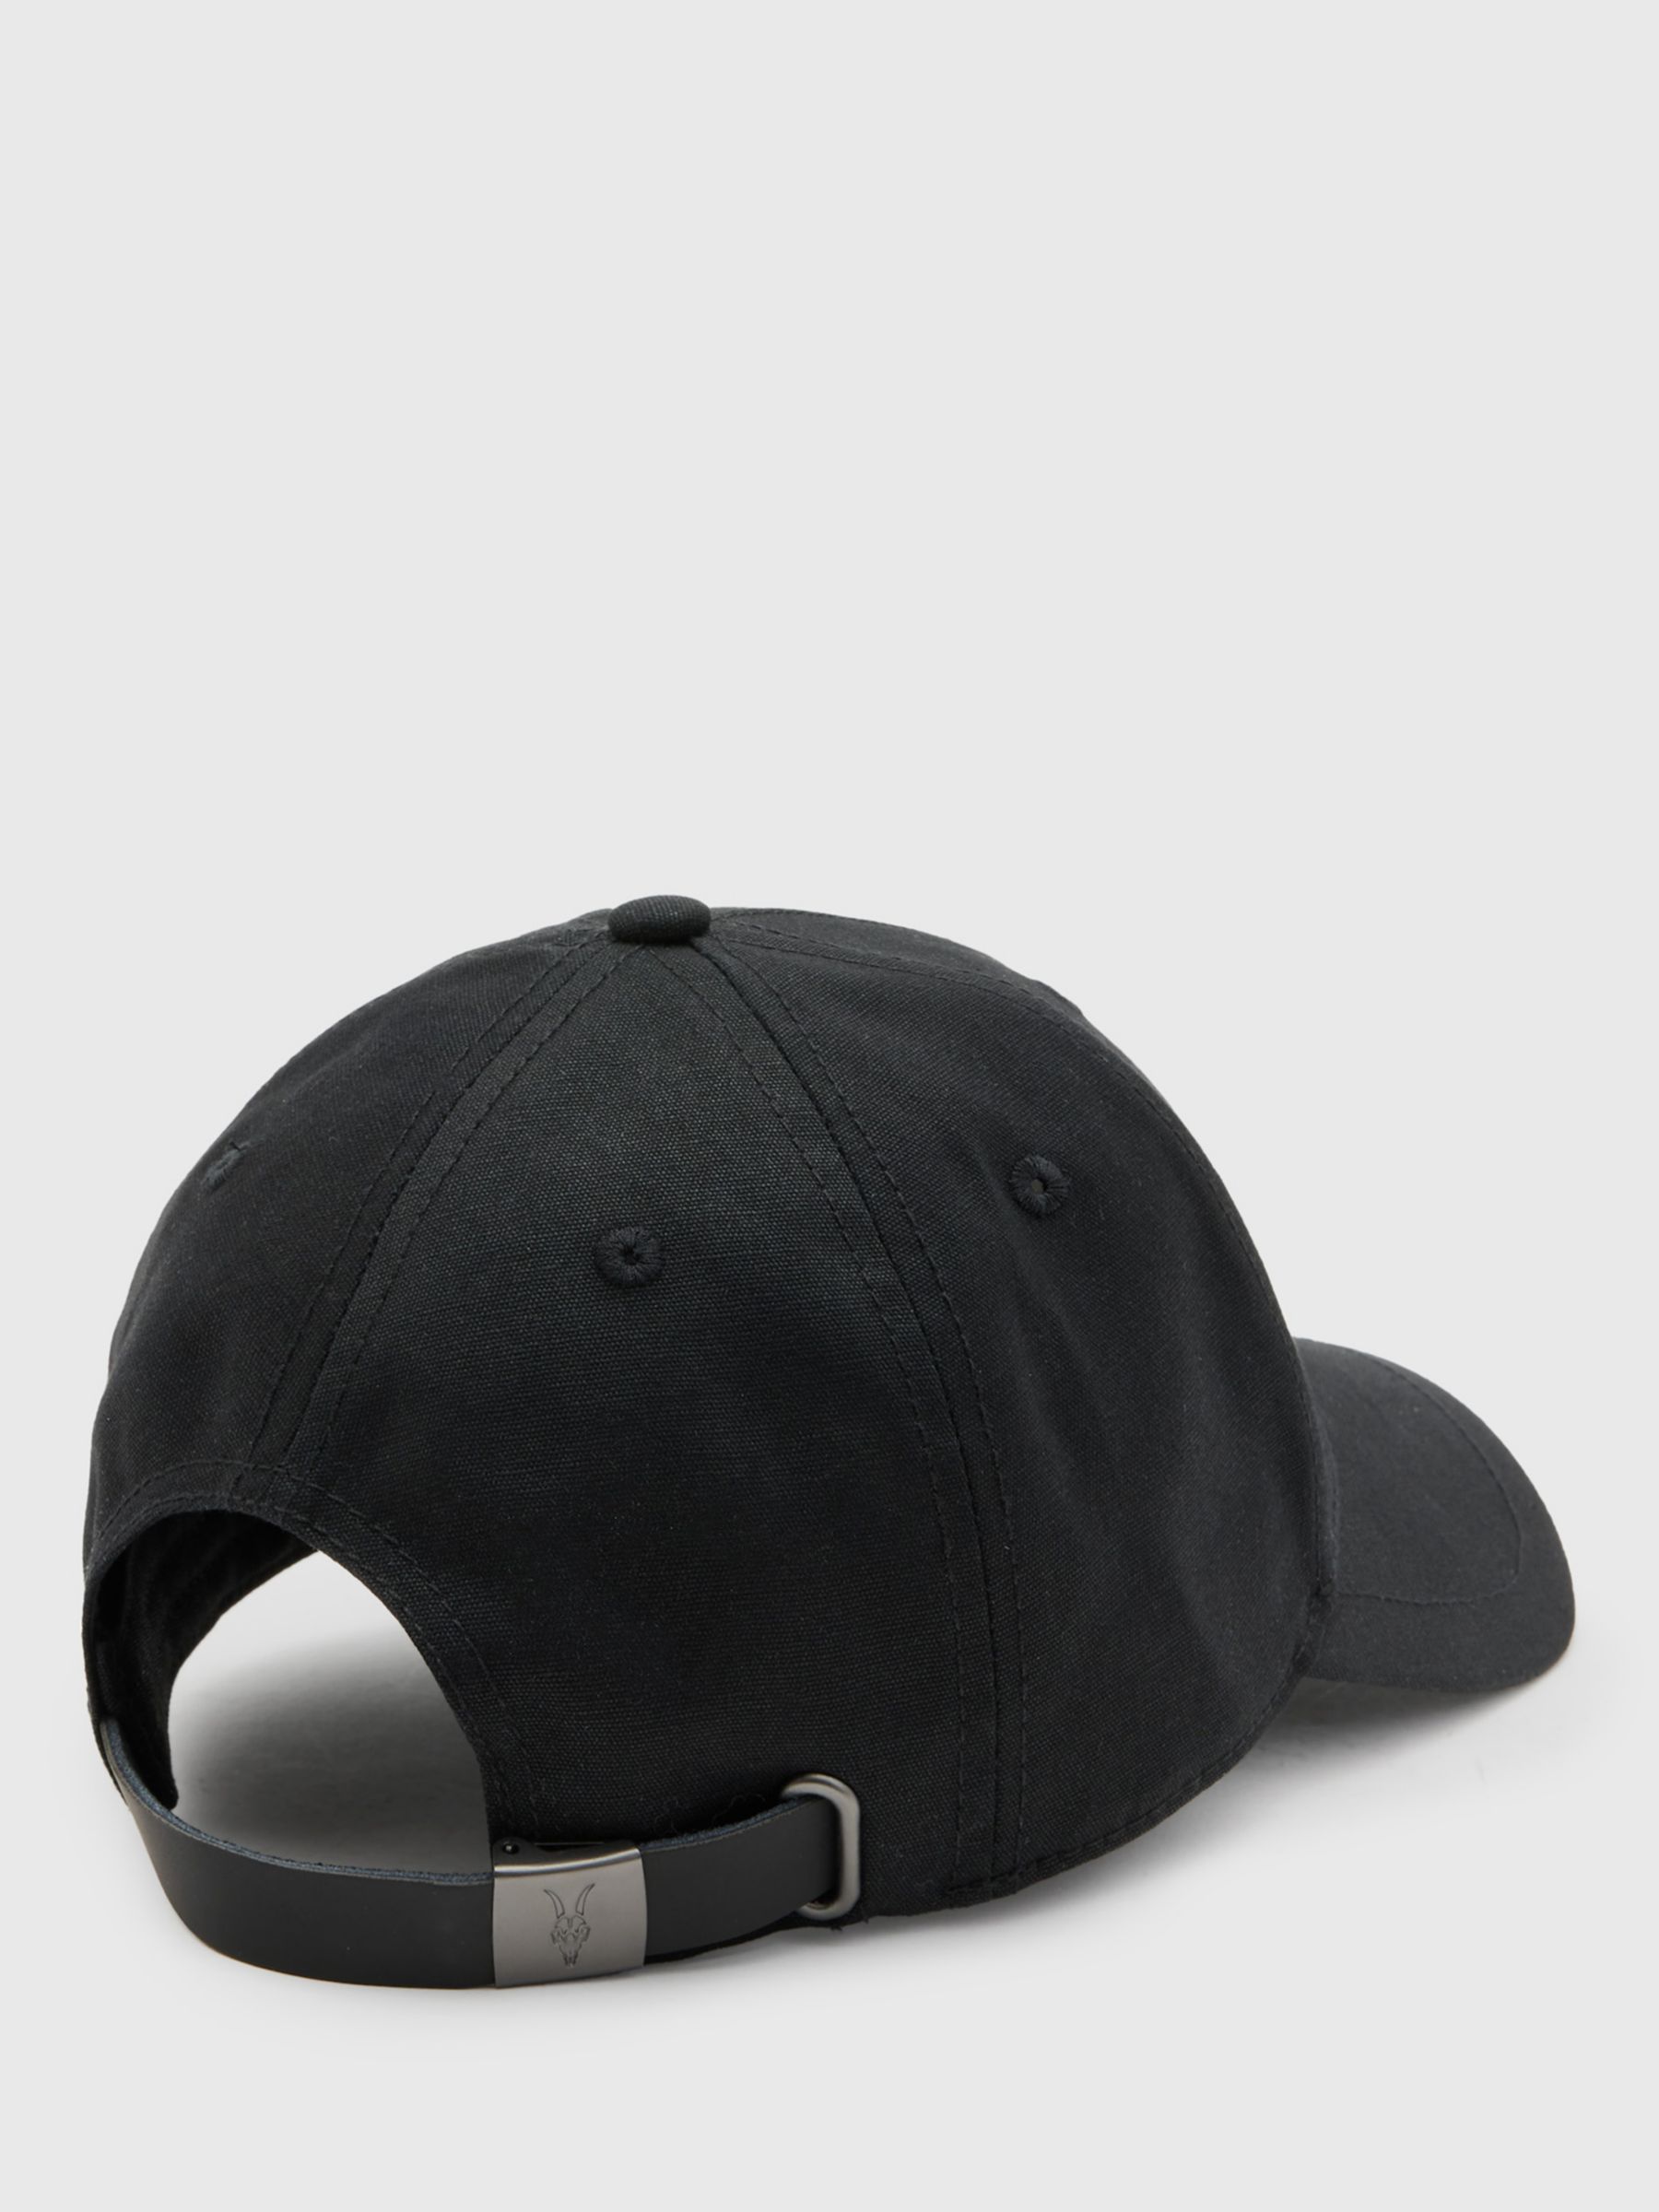 AllSaints Sun Smirk Baseball Cap, Black, One Size